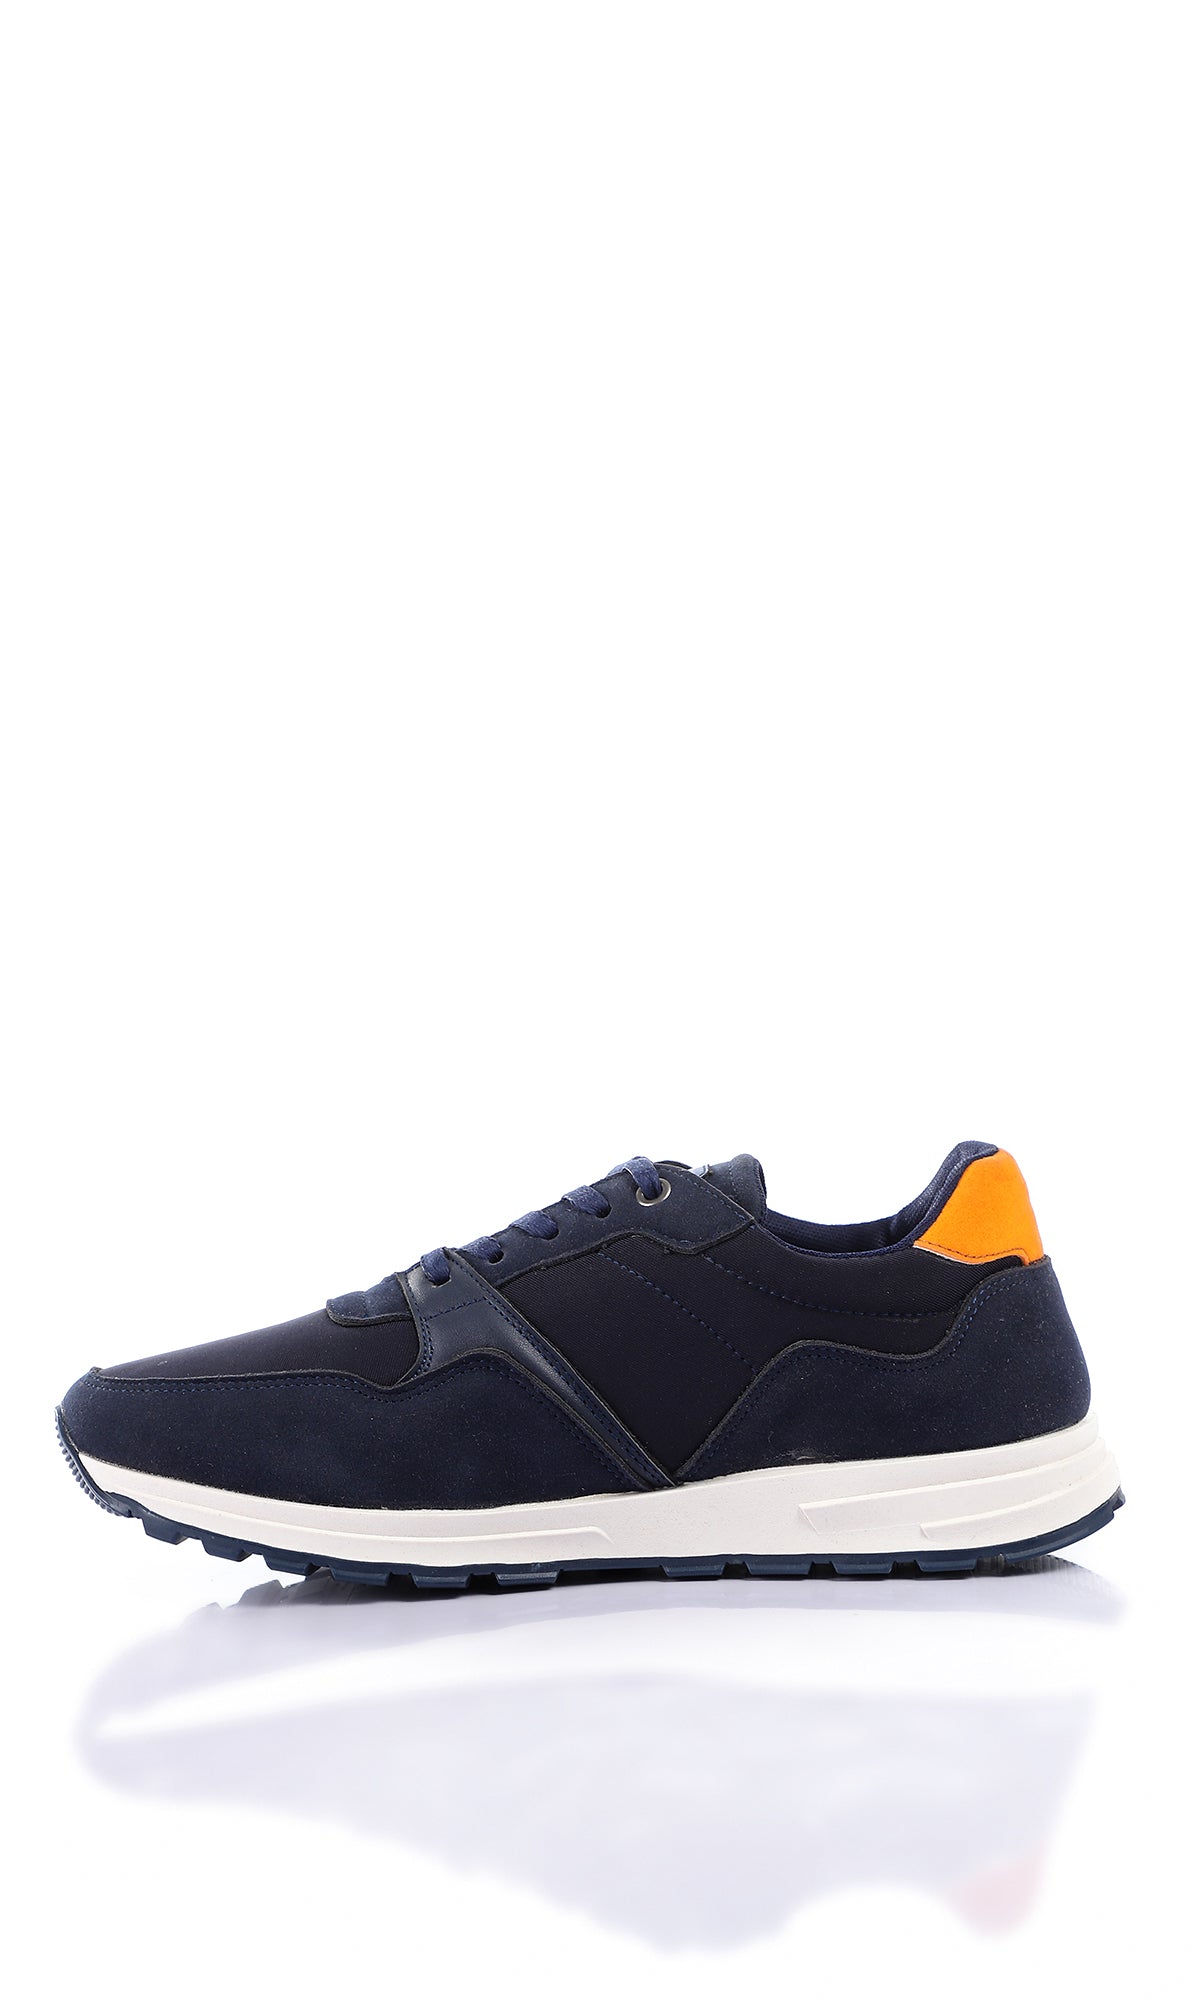 O160059 Fashionable Lace Up Casual Shoes - Navy Blue & Orange